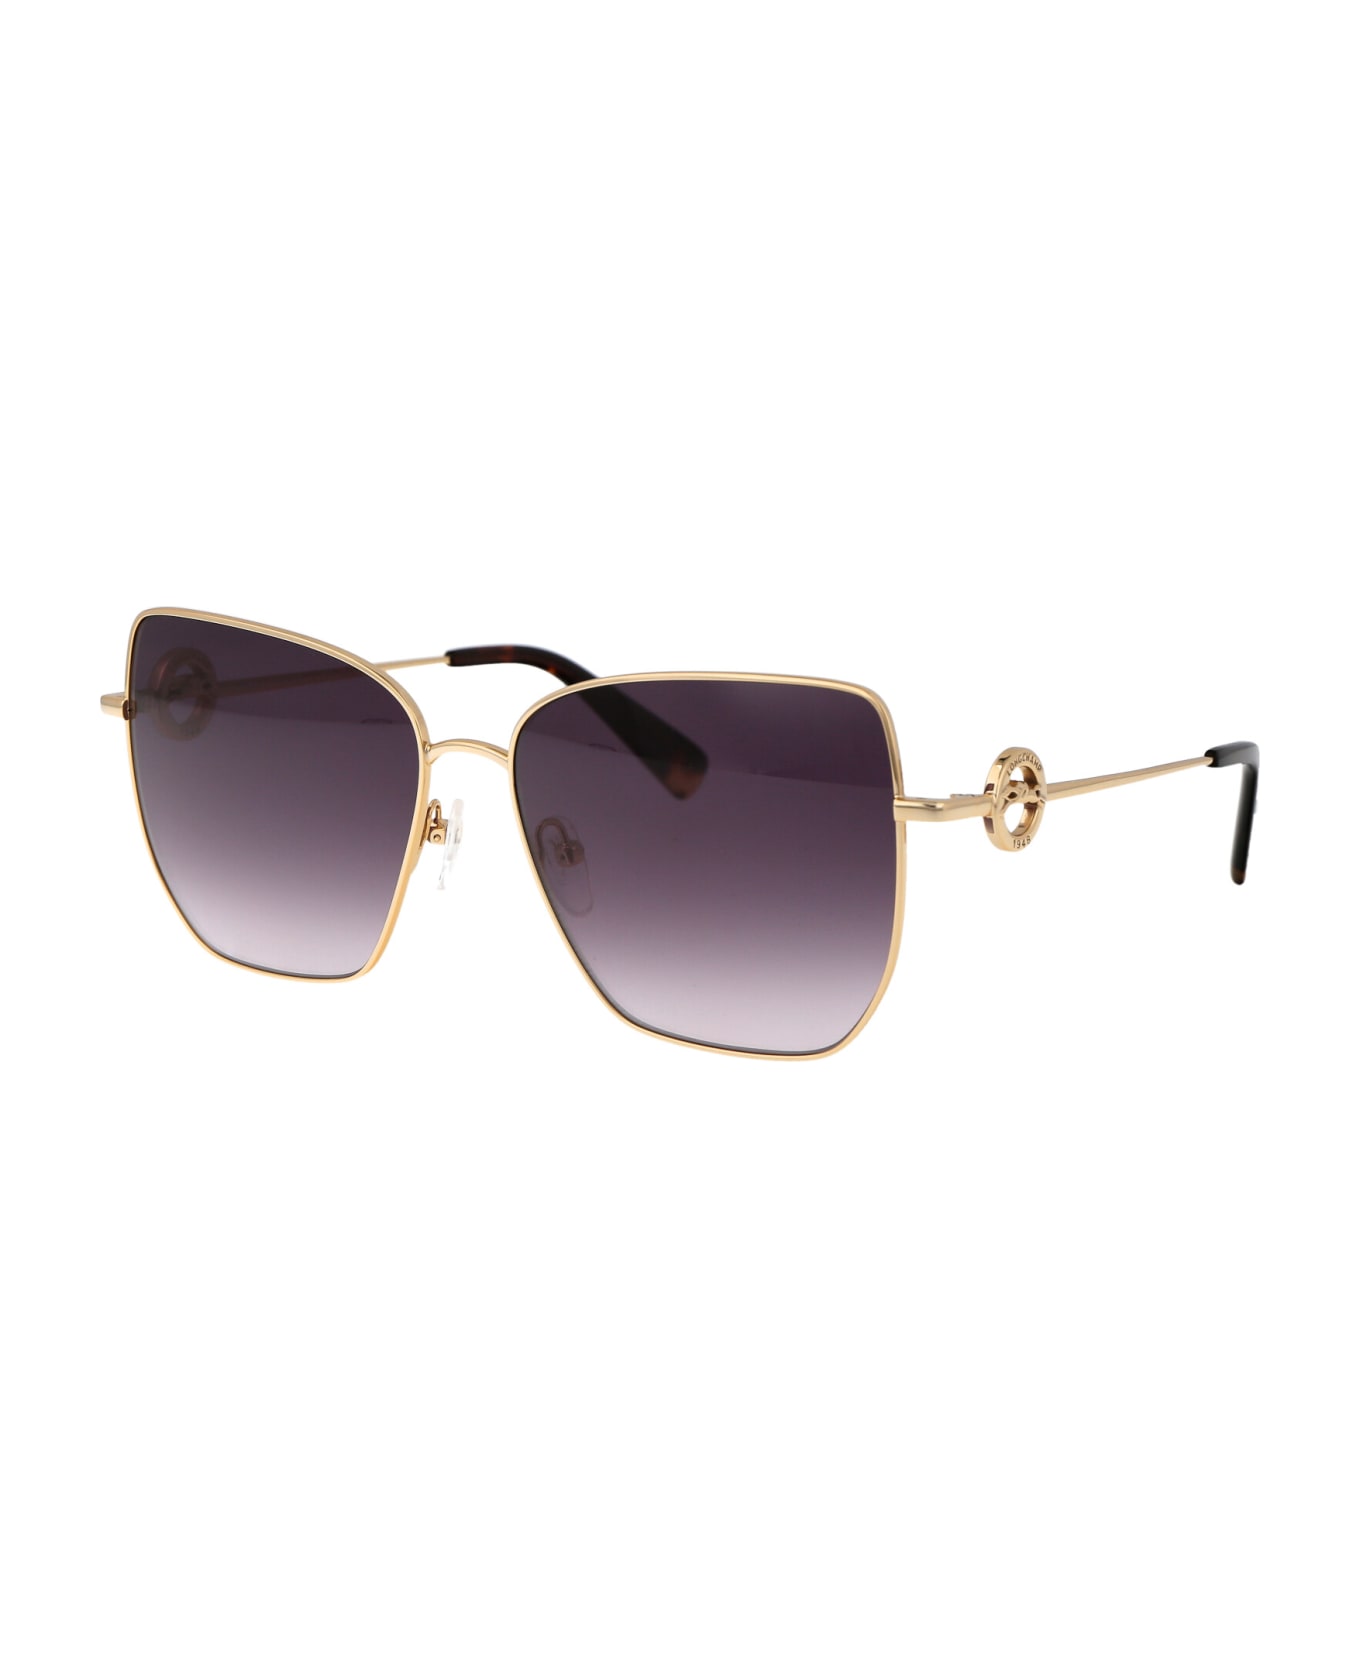 Longchamp Lo169s Sunglasses - 723 GOLD